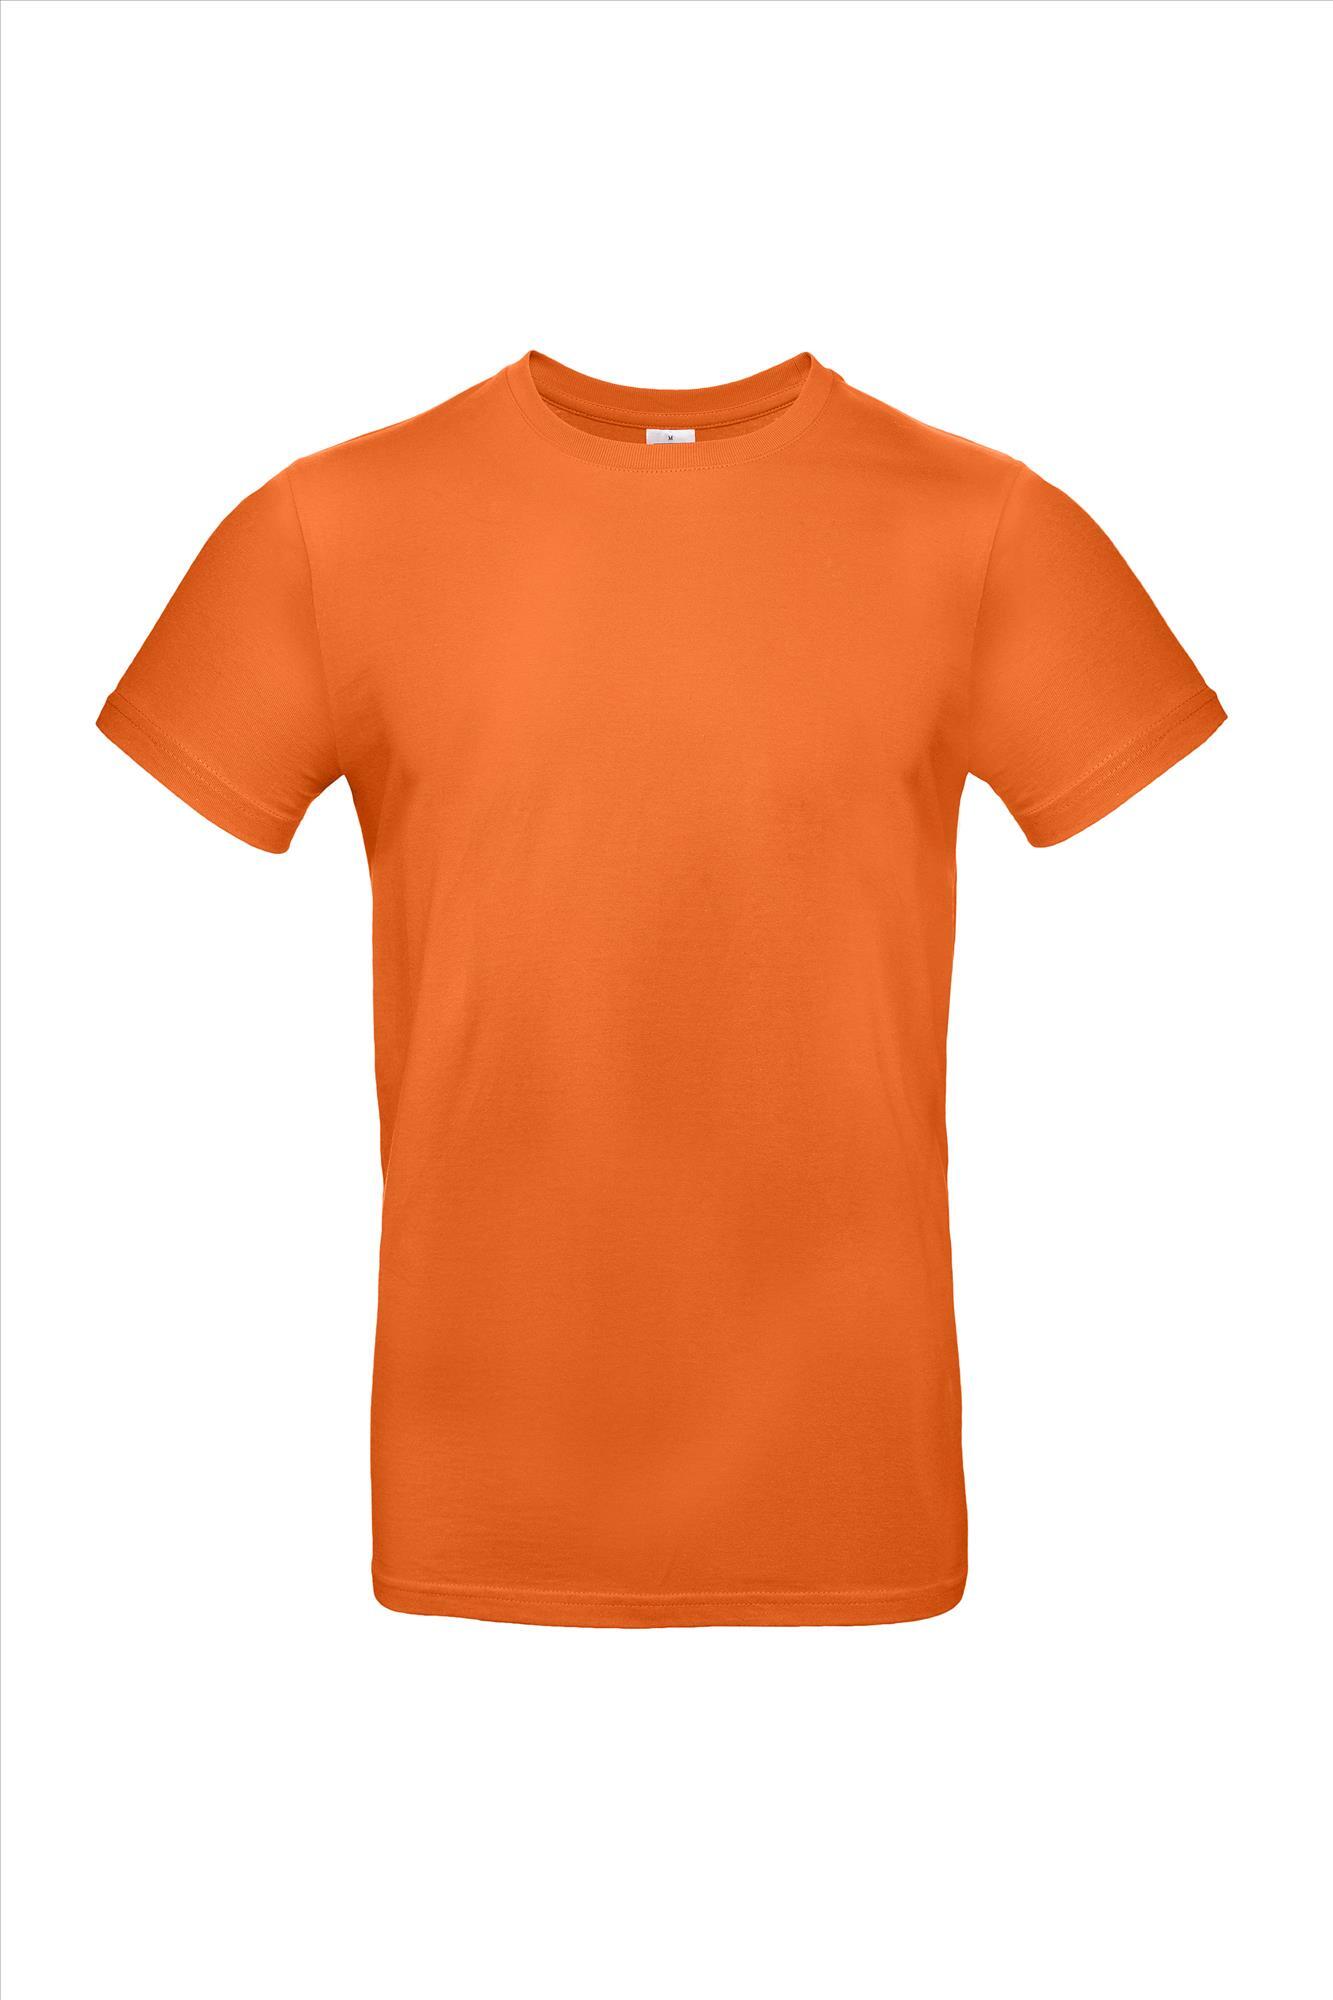 Modern T-shirt voor heren urban oranje unisex koningsdag